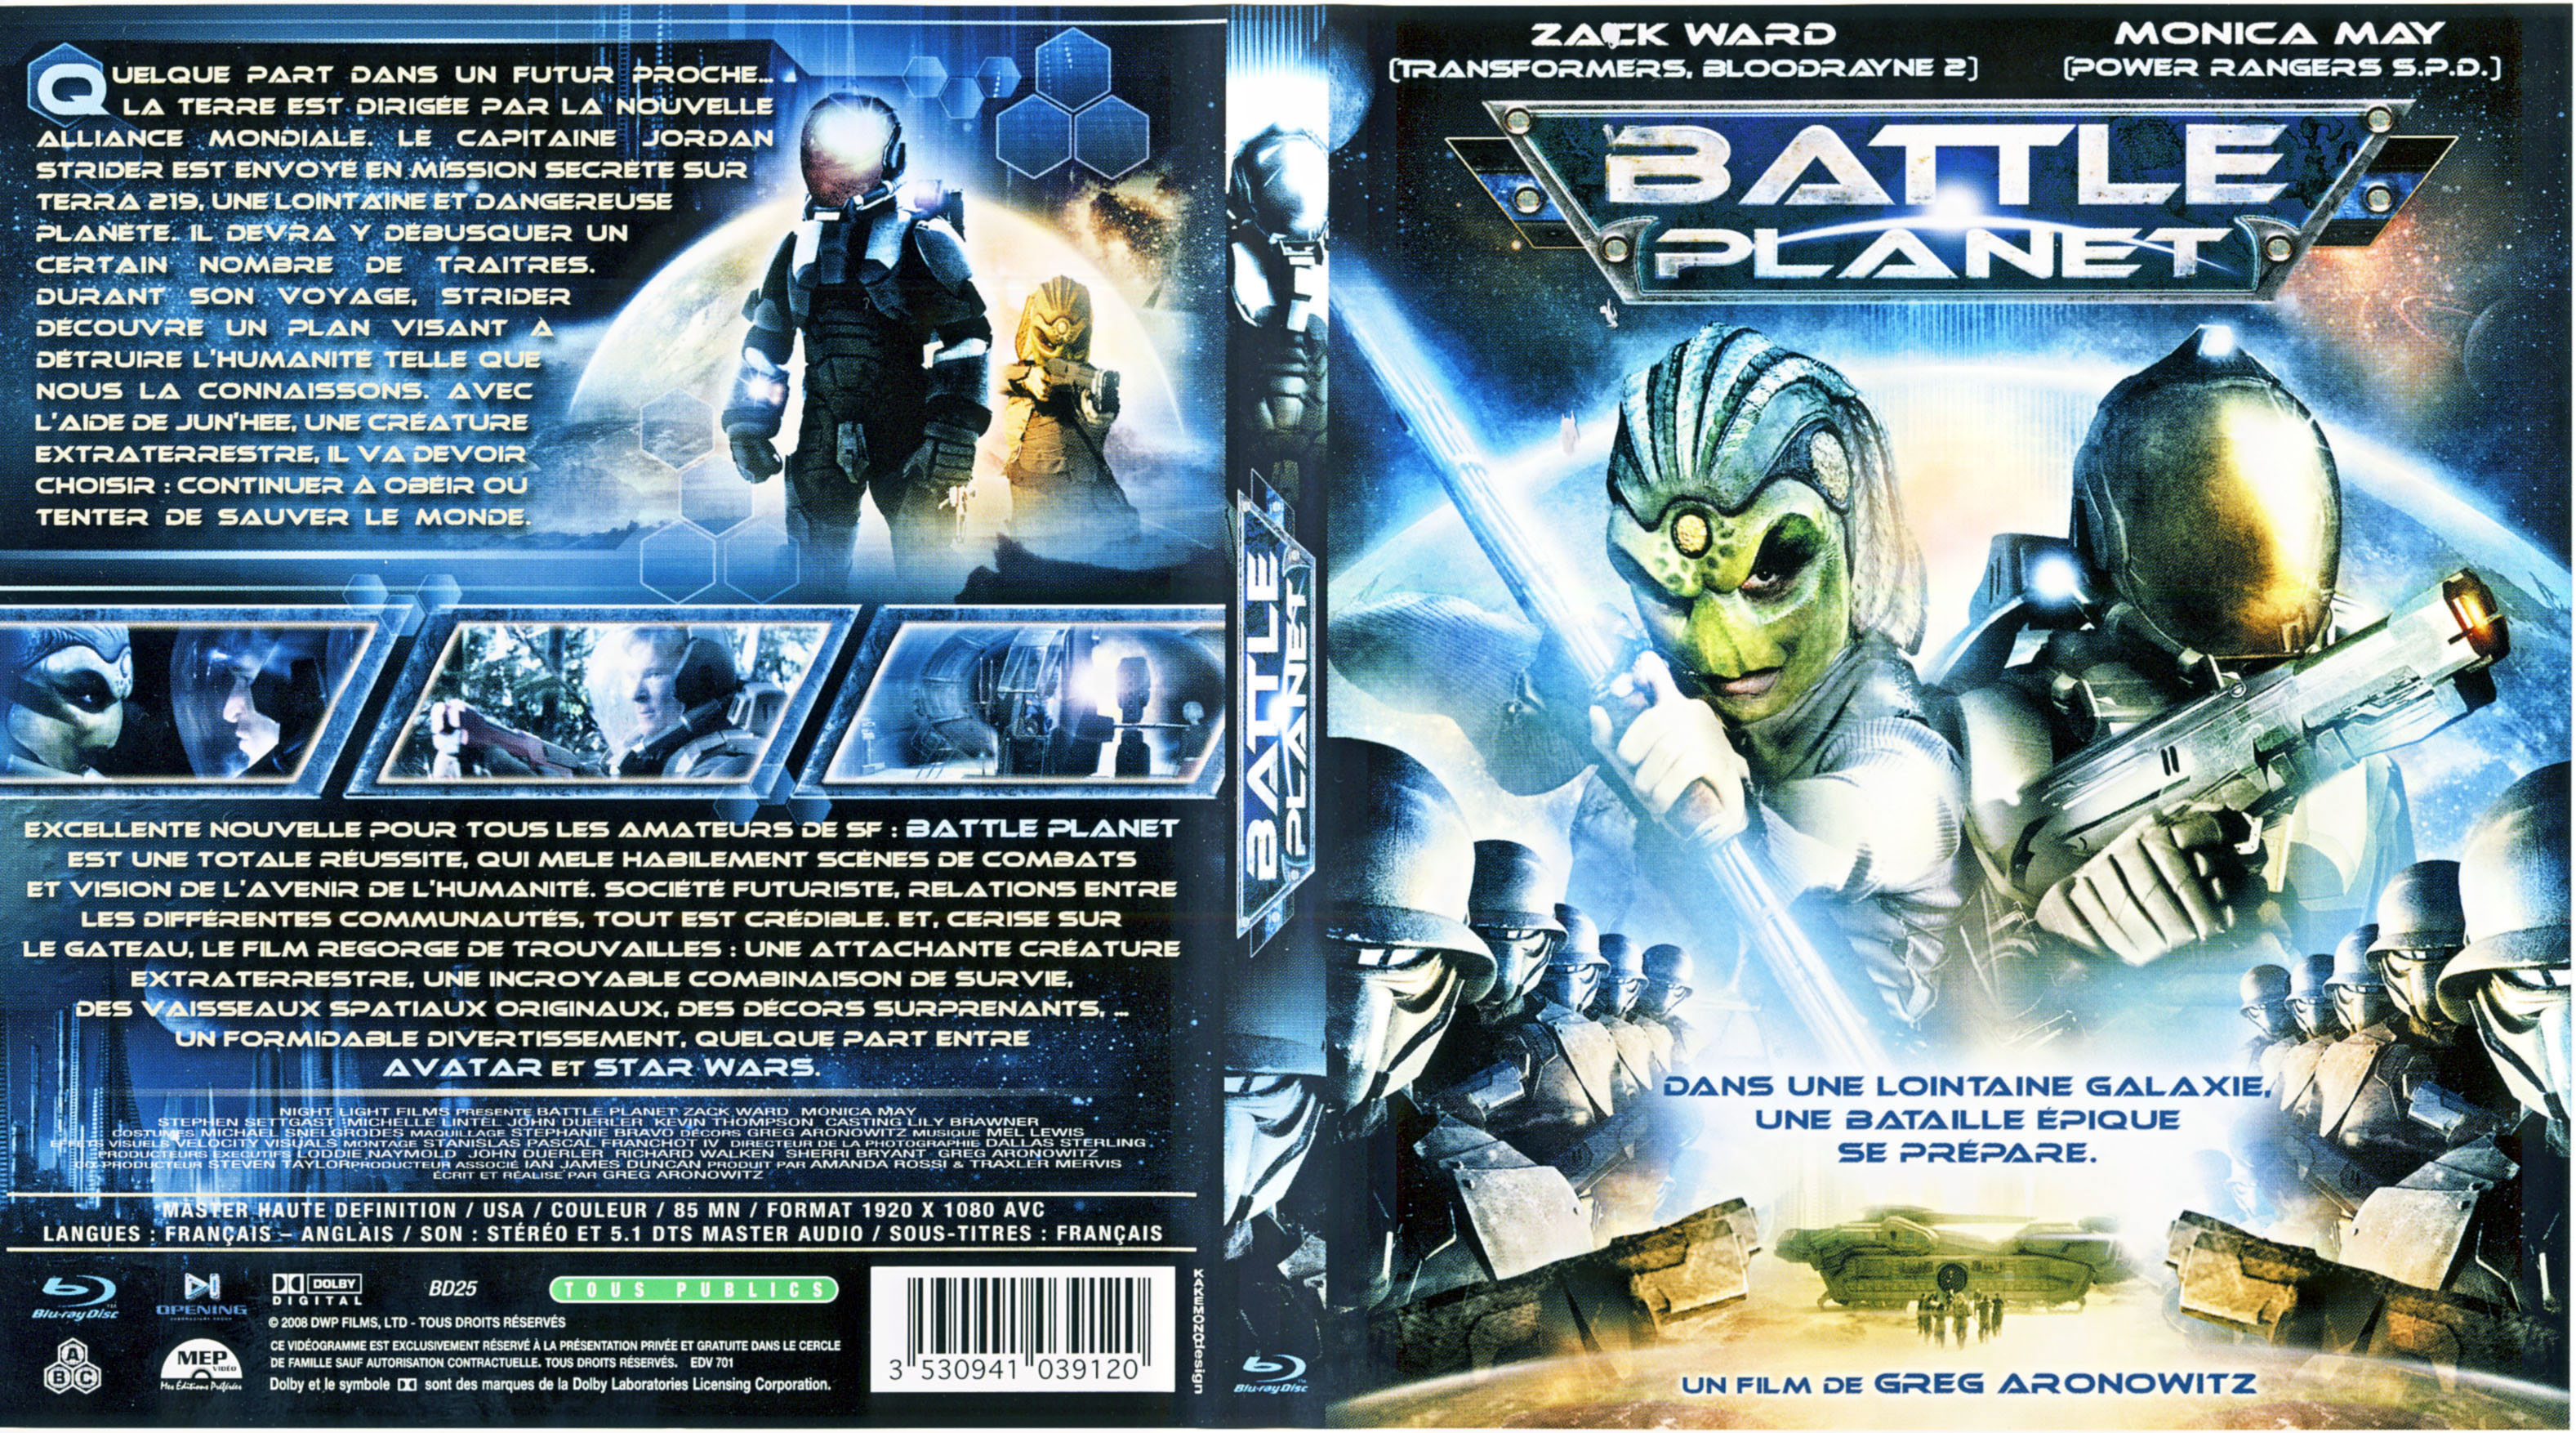 Jaquette DVD Battle planet (BLU-RAY)